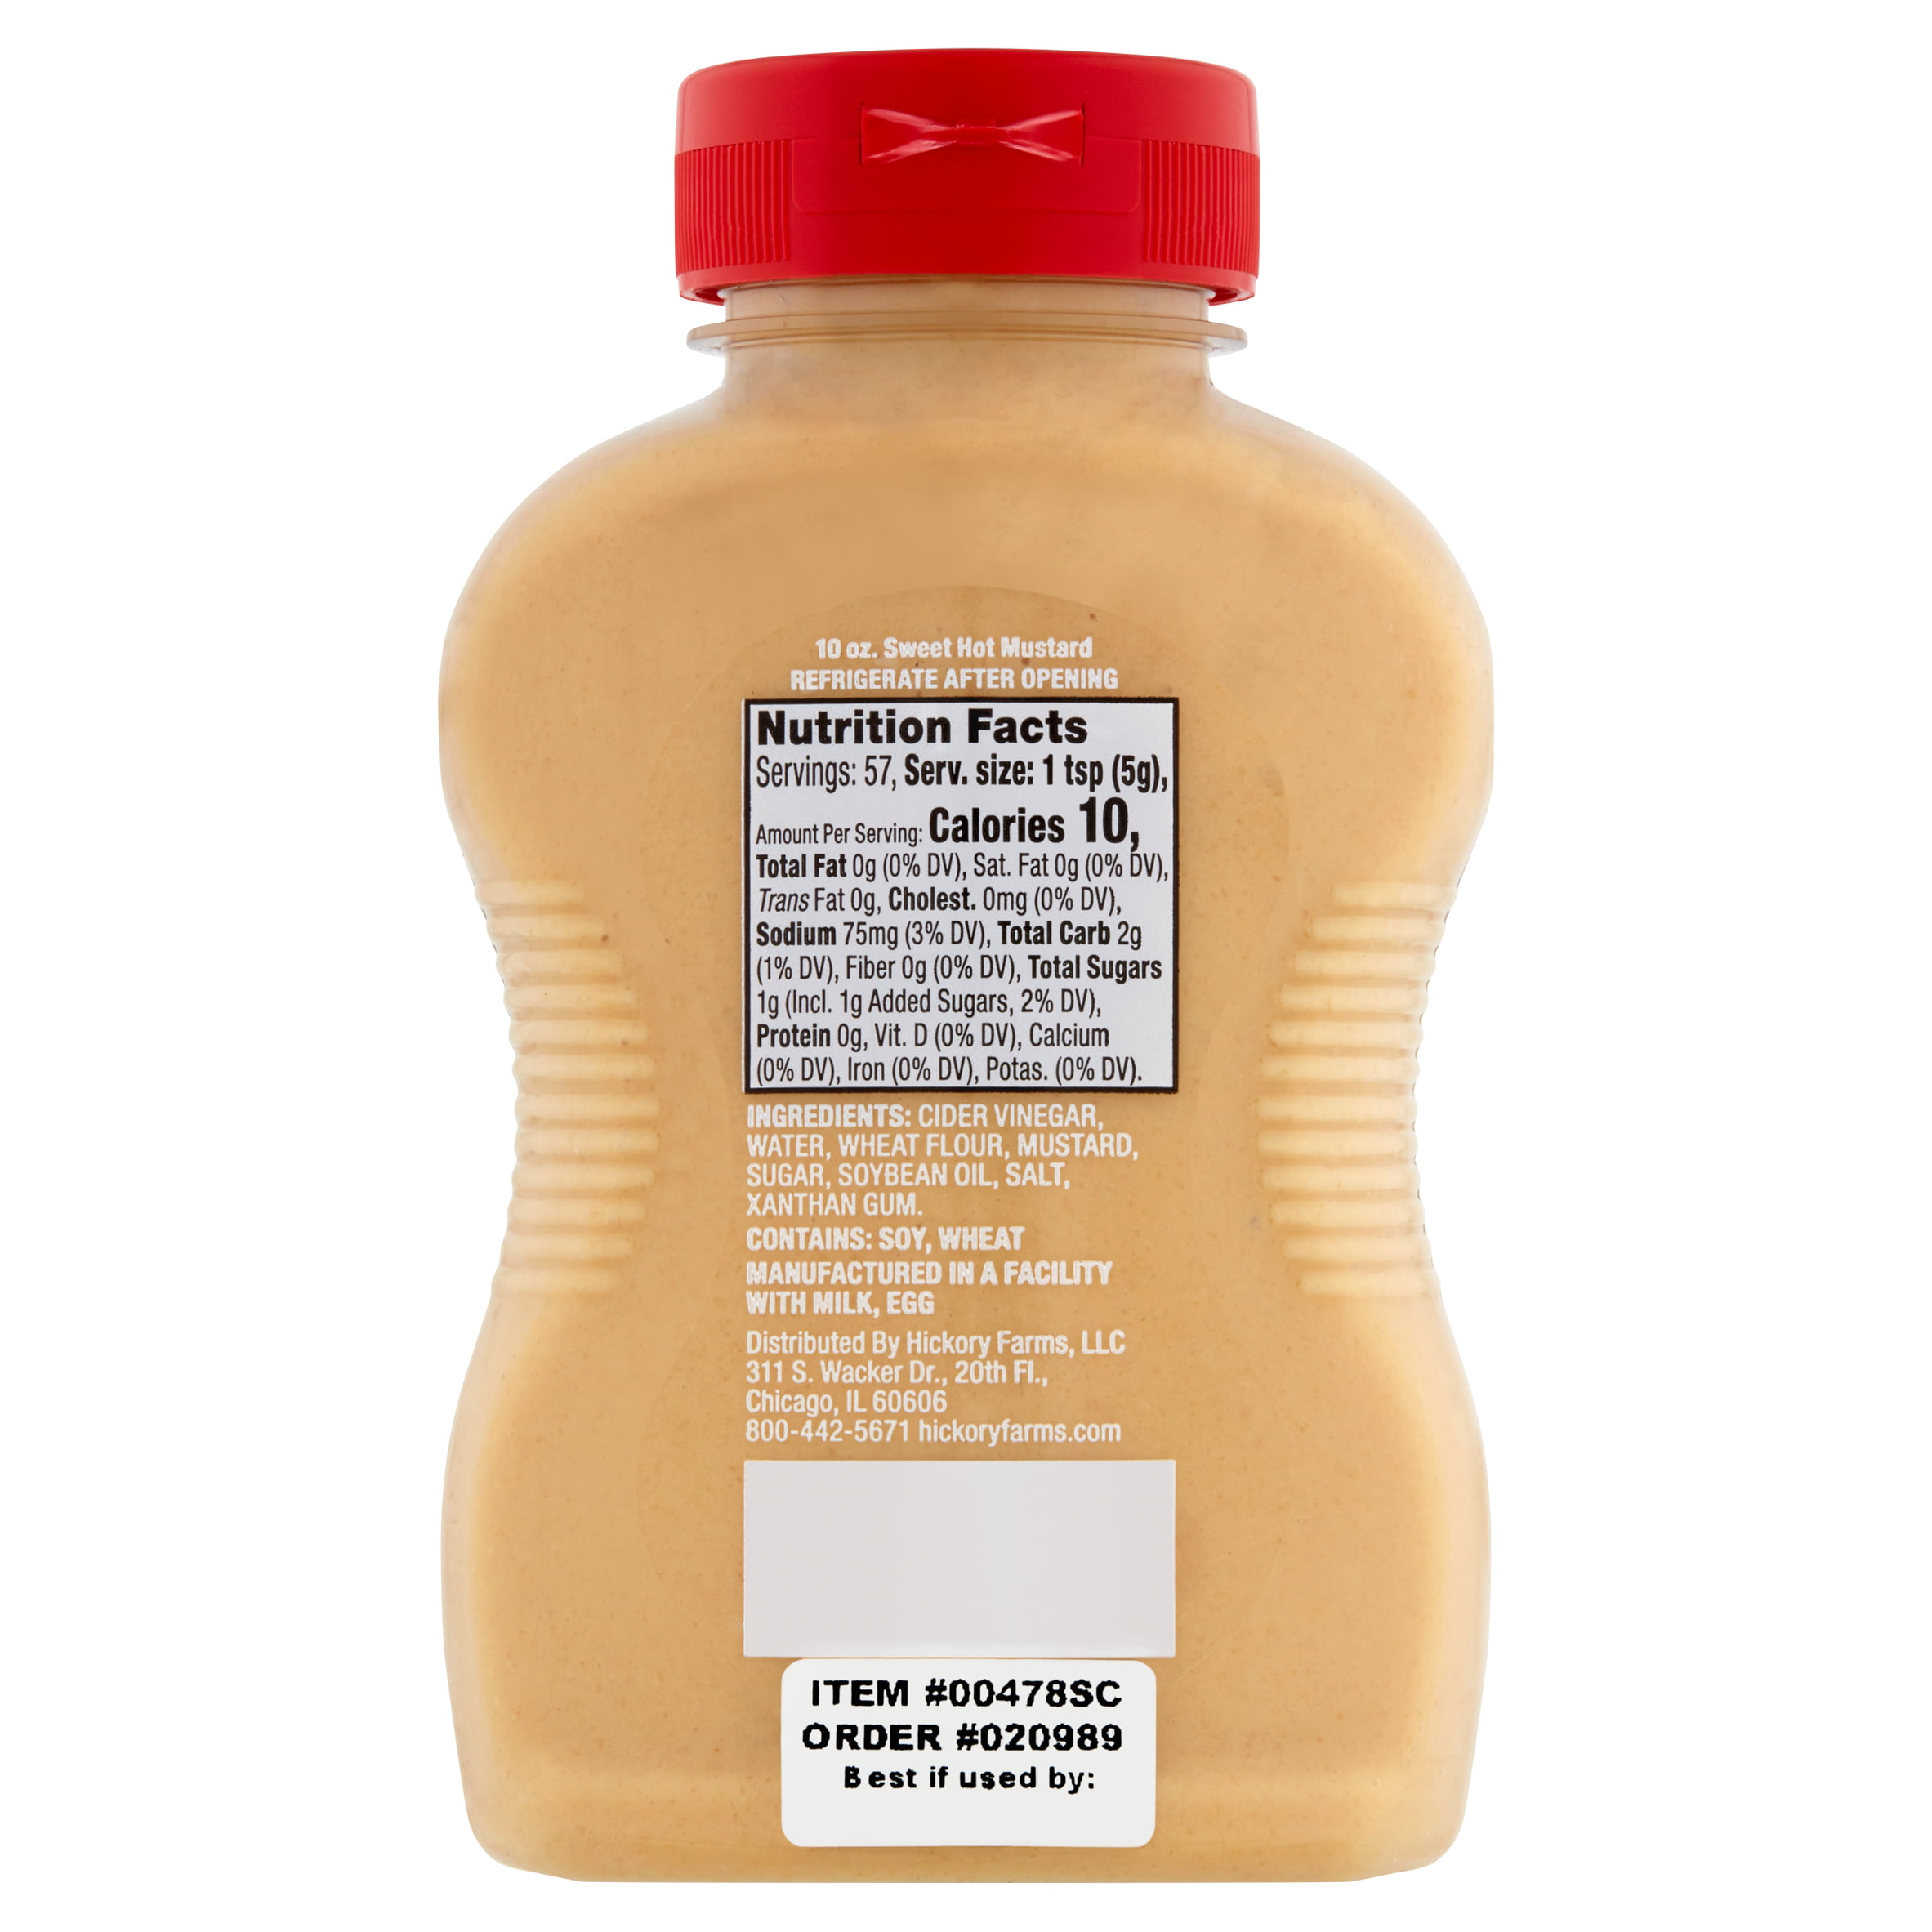 H Hickory Farms Sweet/Hot Mustard. 1.25 oz/35gm